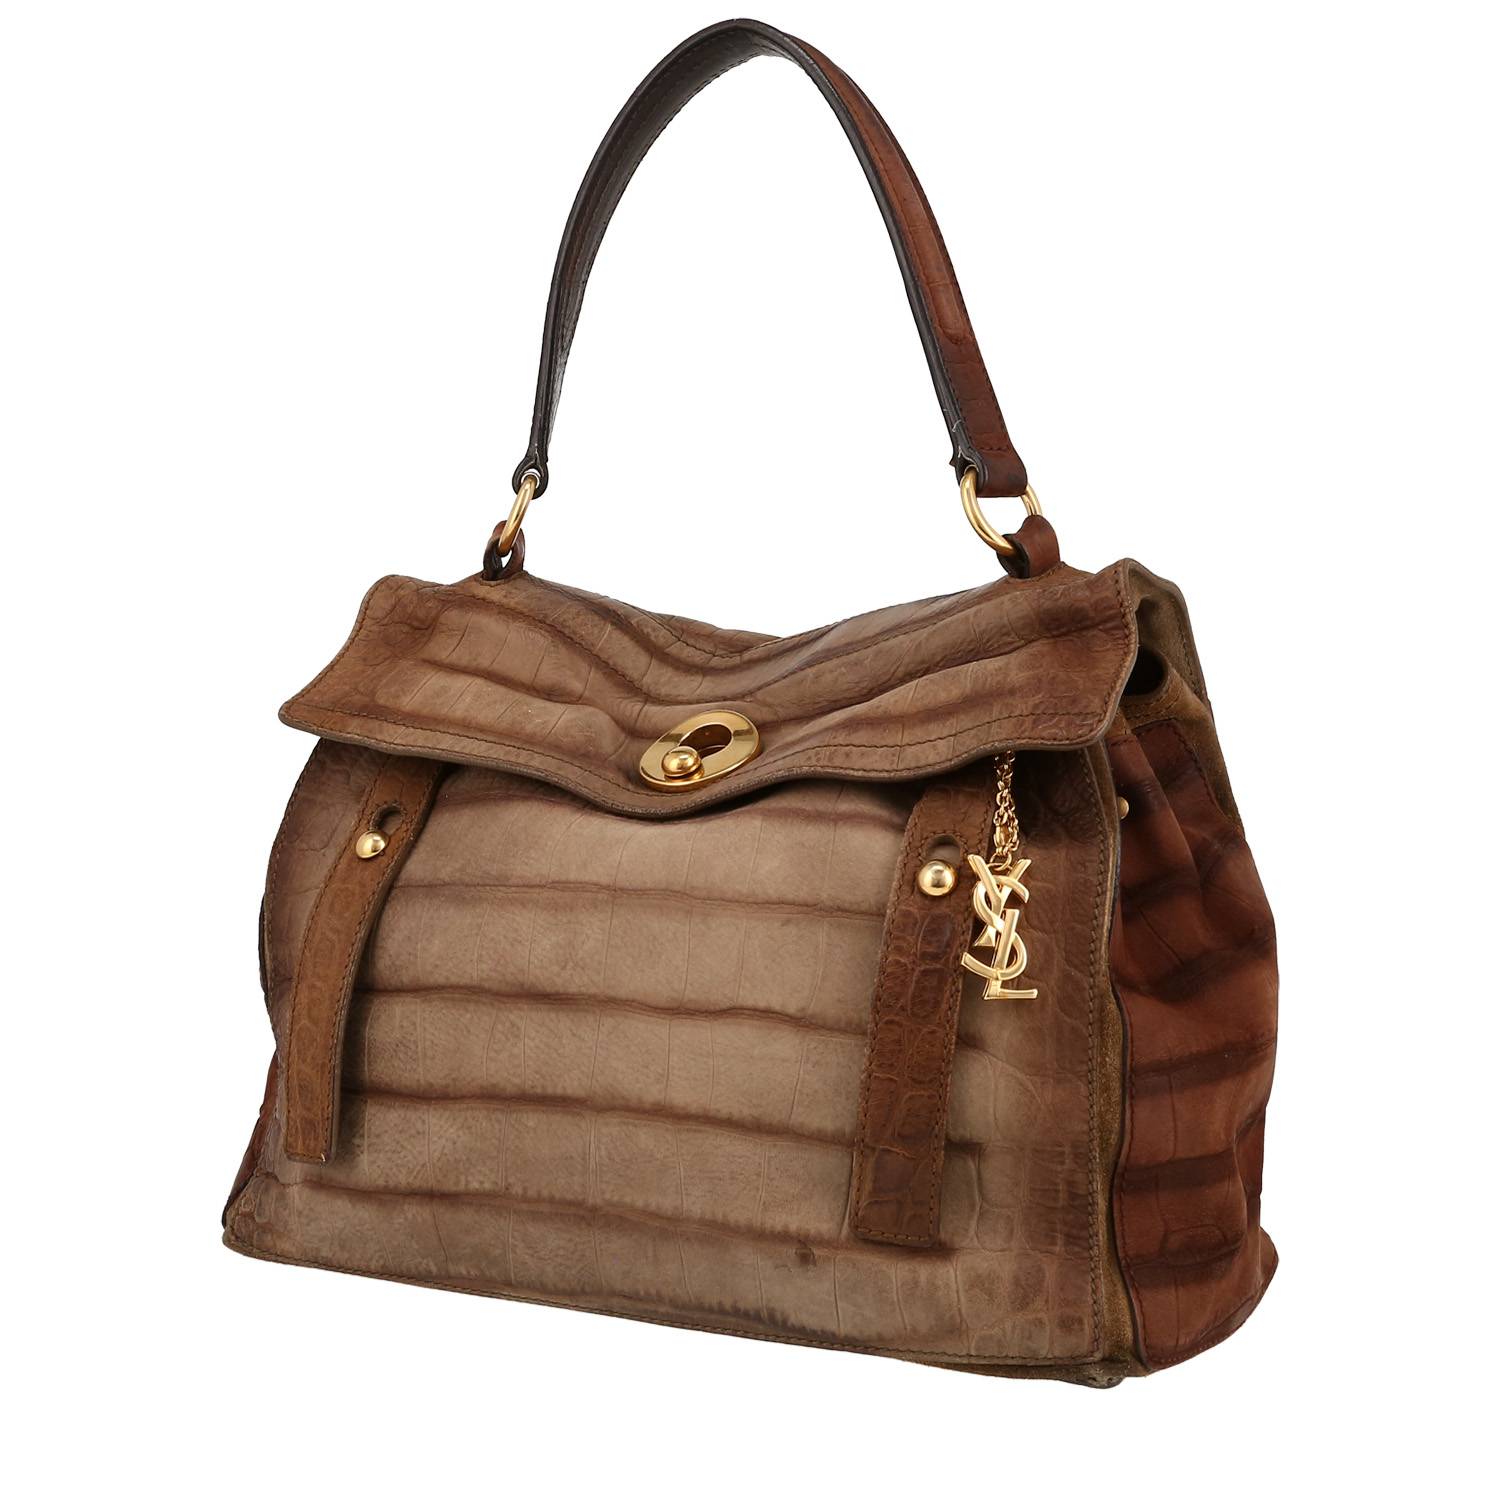 Saint Laurent  Muse Two medium model  handbag  in brown leather  and brown suede - 00pp